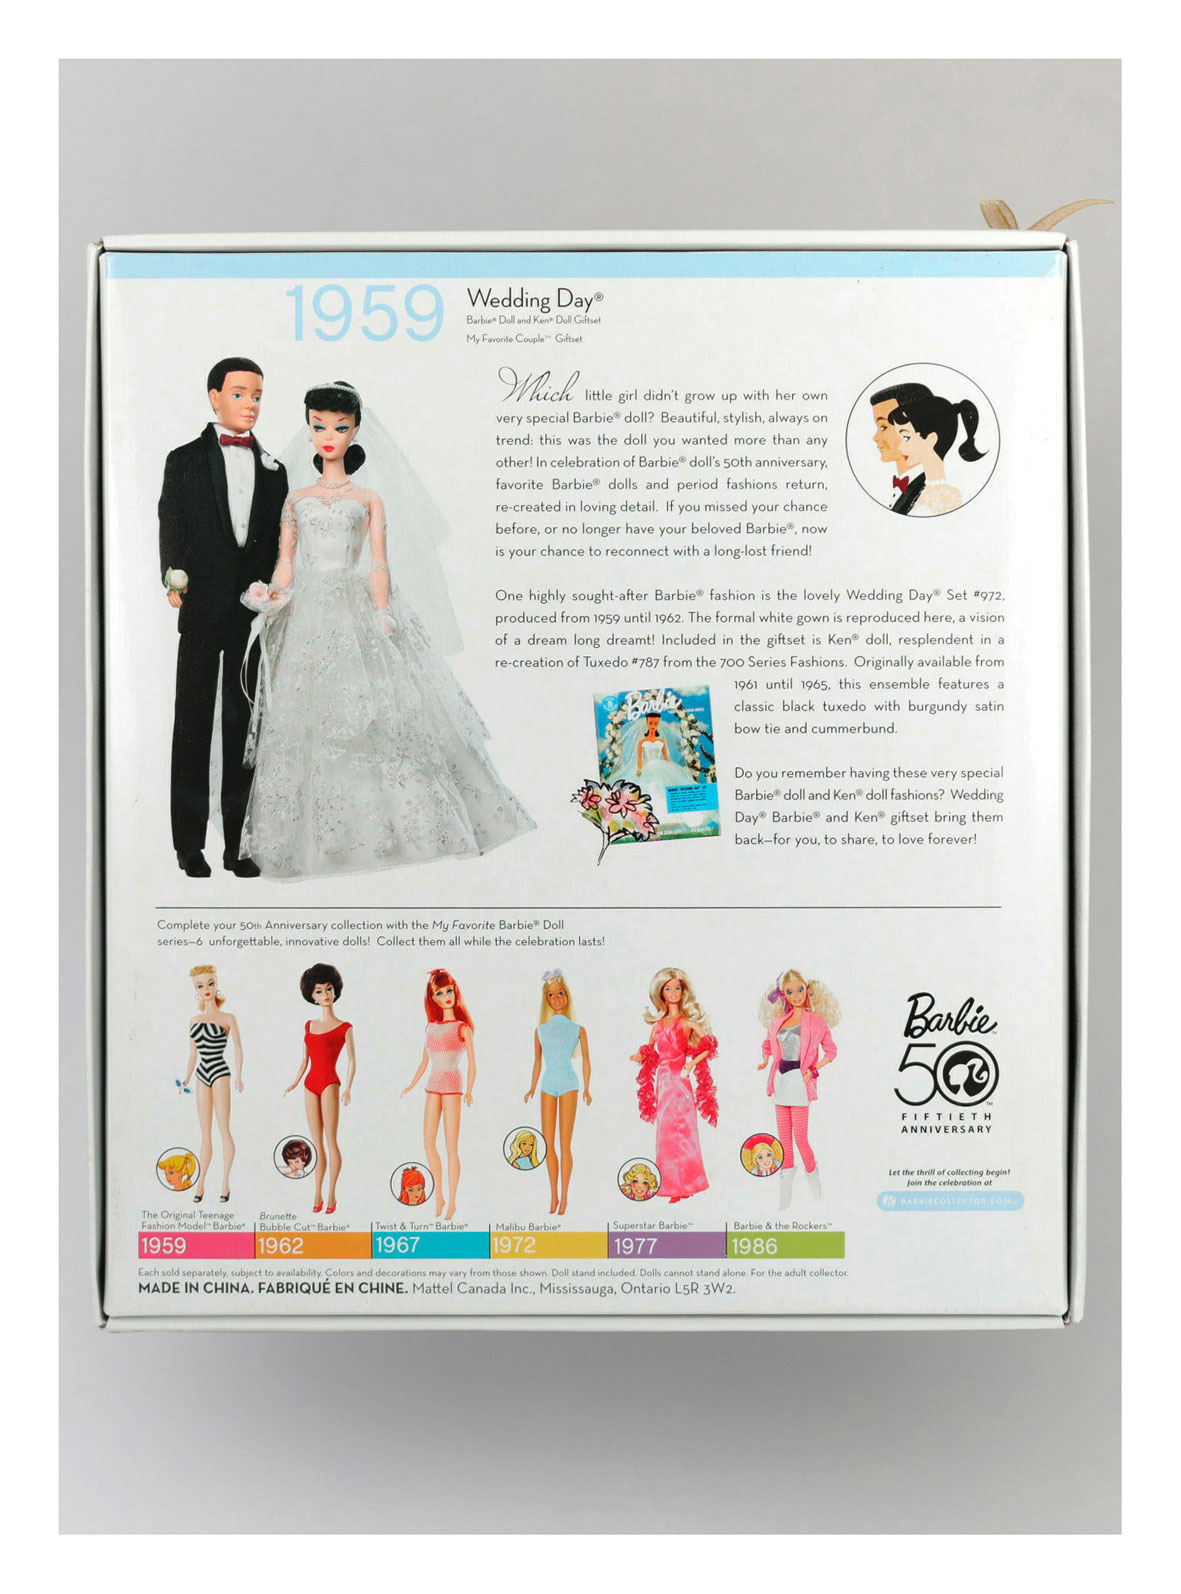 2009 Wedding Day (Barbie 50th Anniversary) original packaging